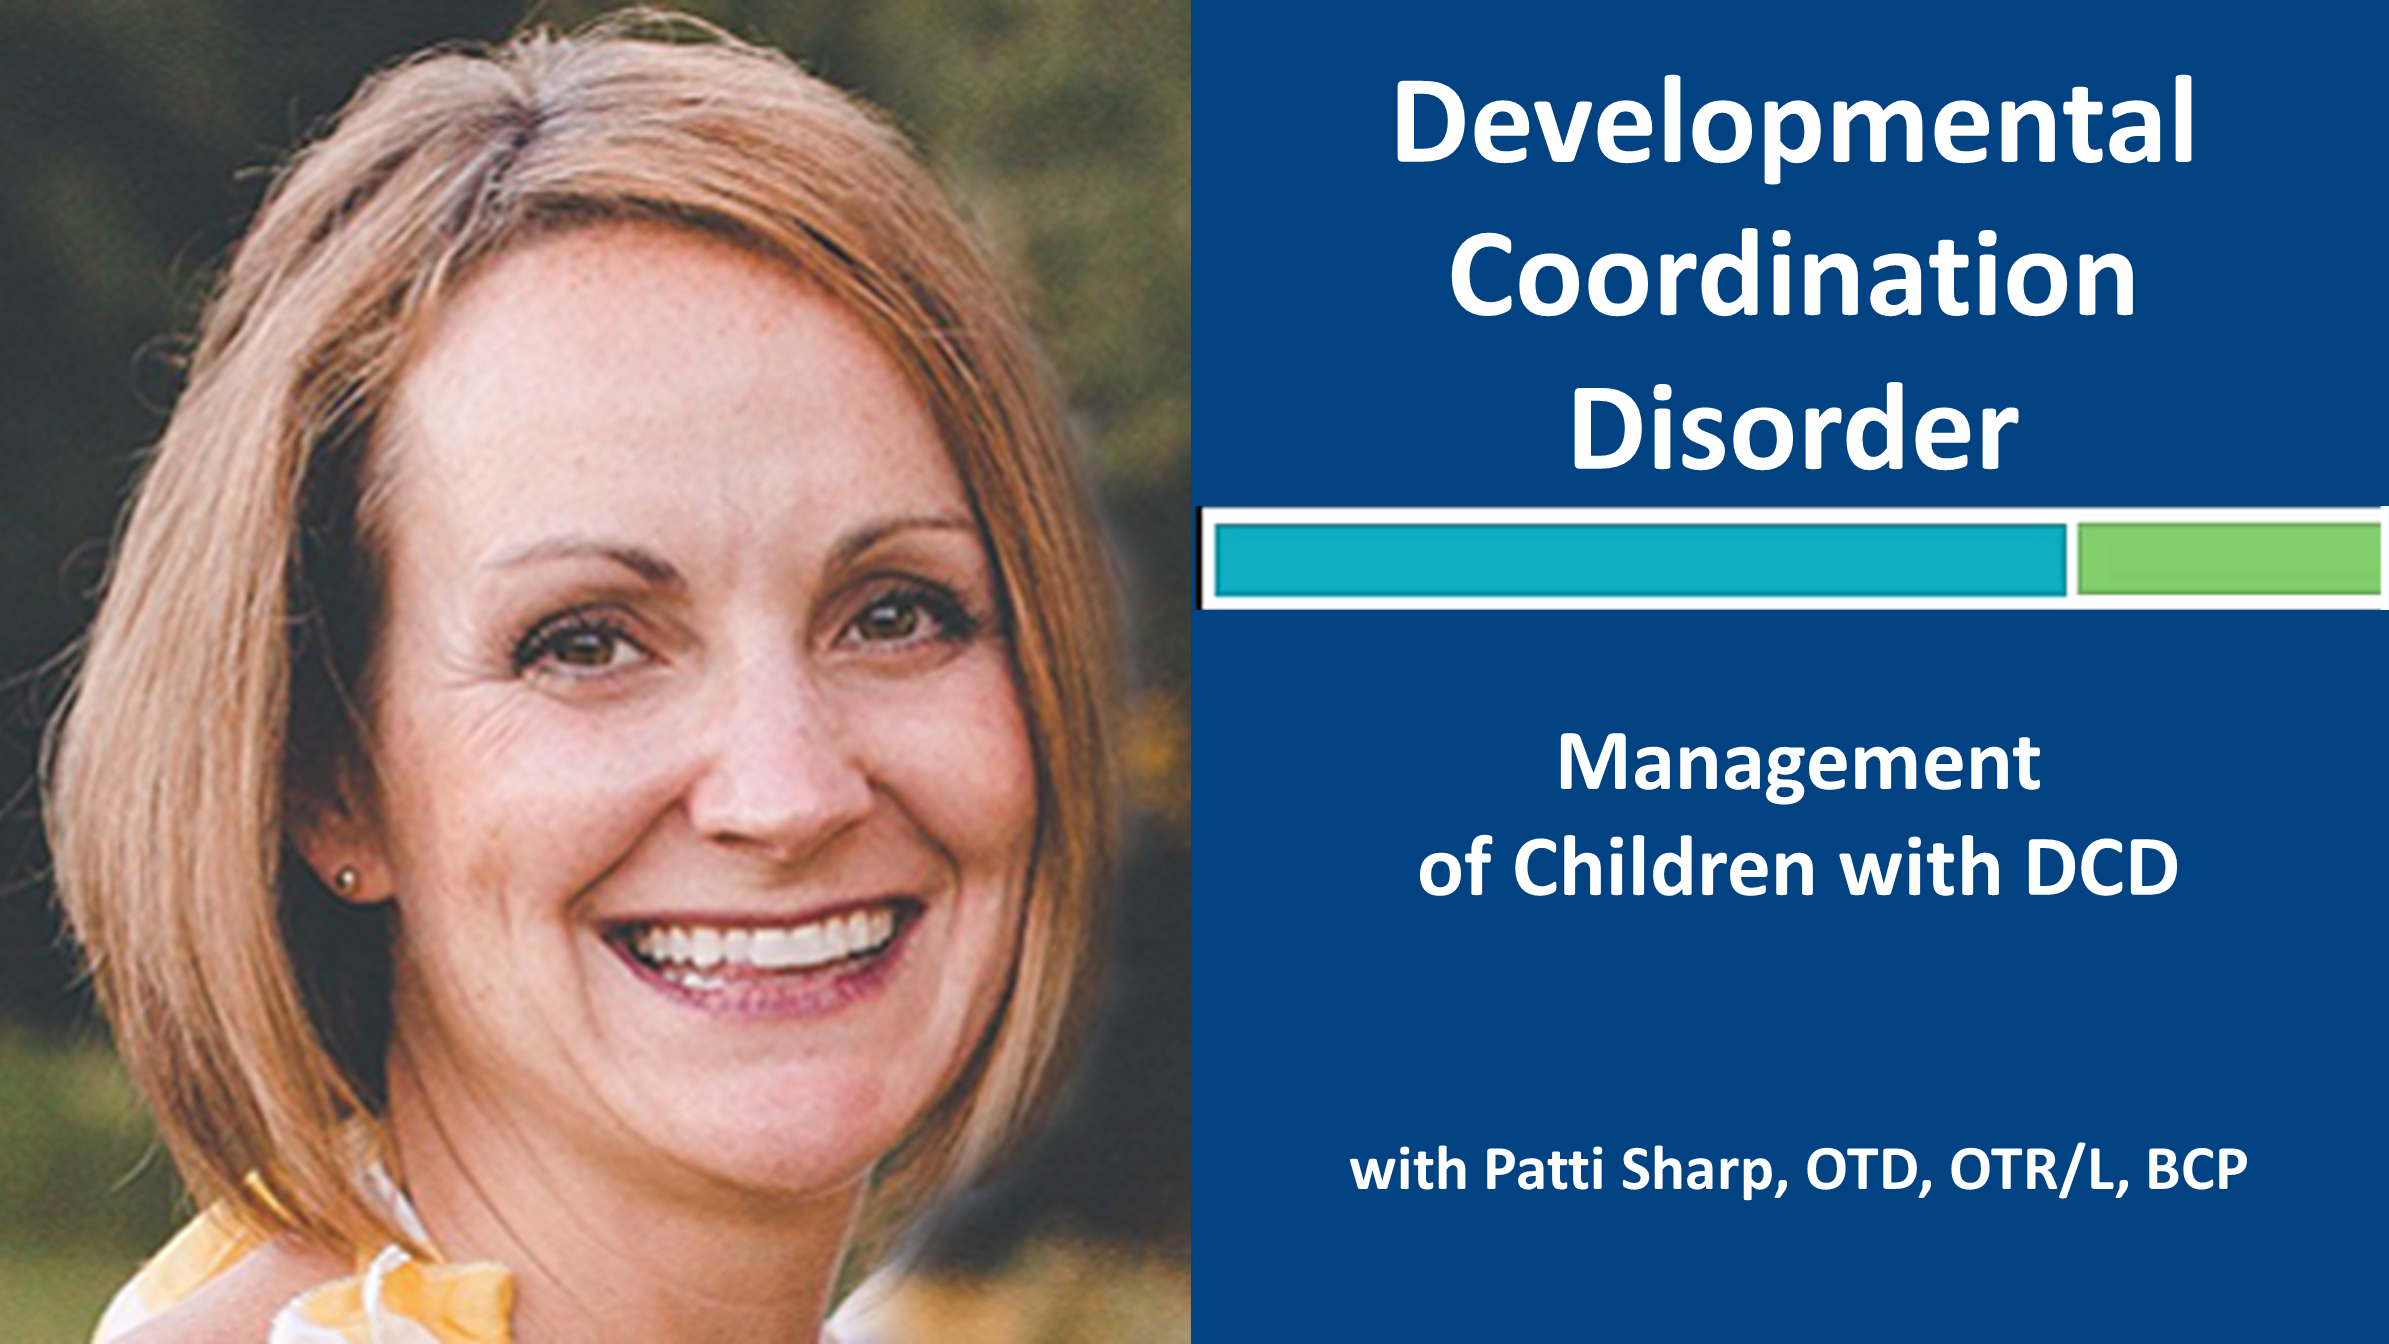 Webinar 3: Developmental Coordination Disorder - Management of Children with DCD with Patti Sharp OTD, OTR/L